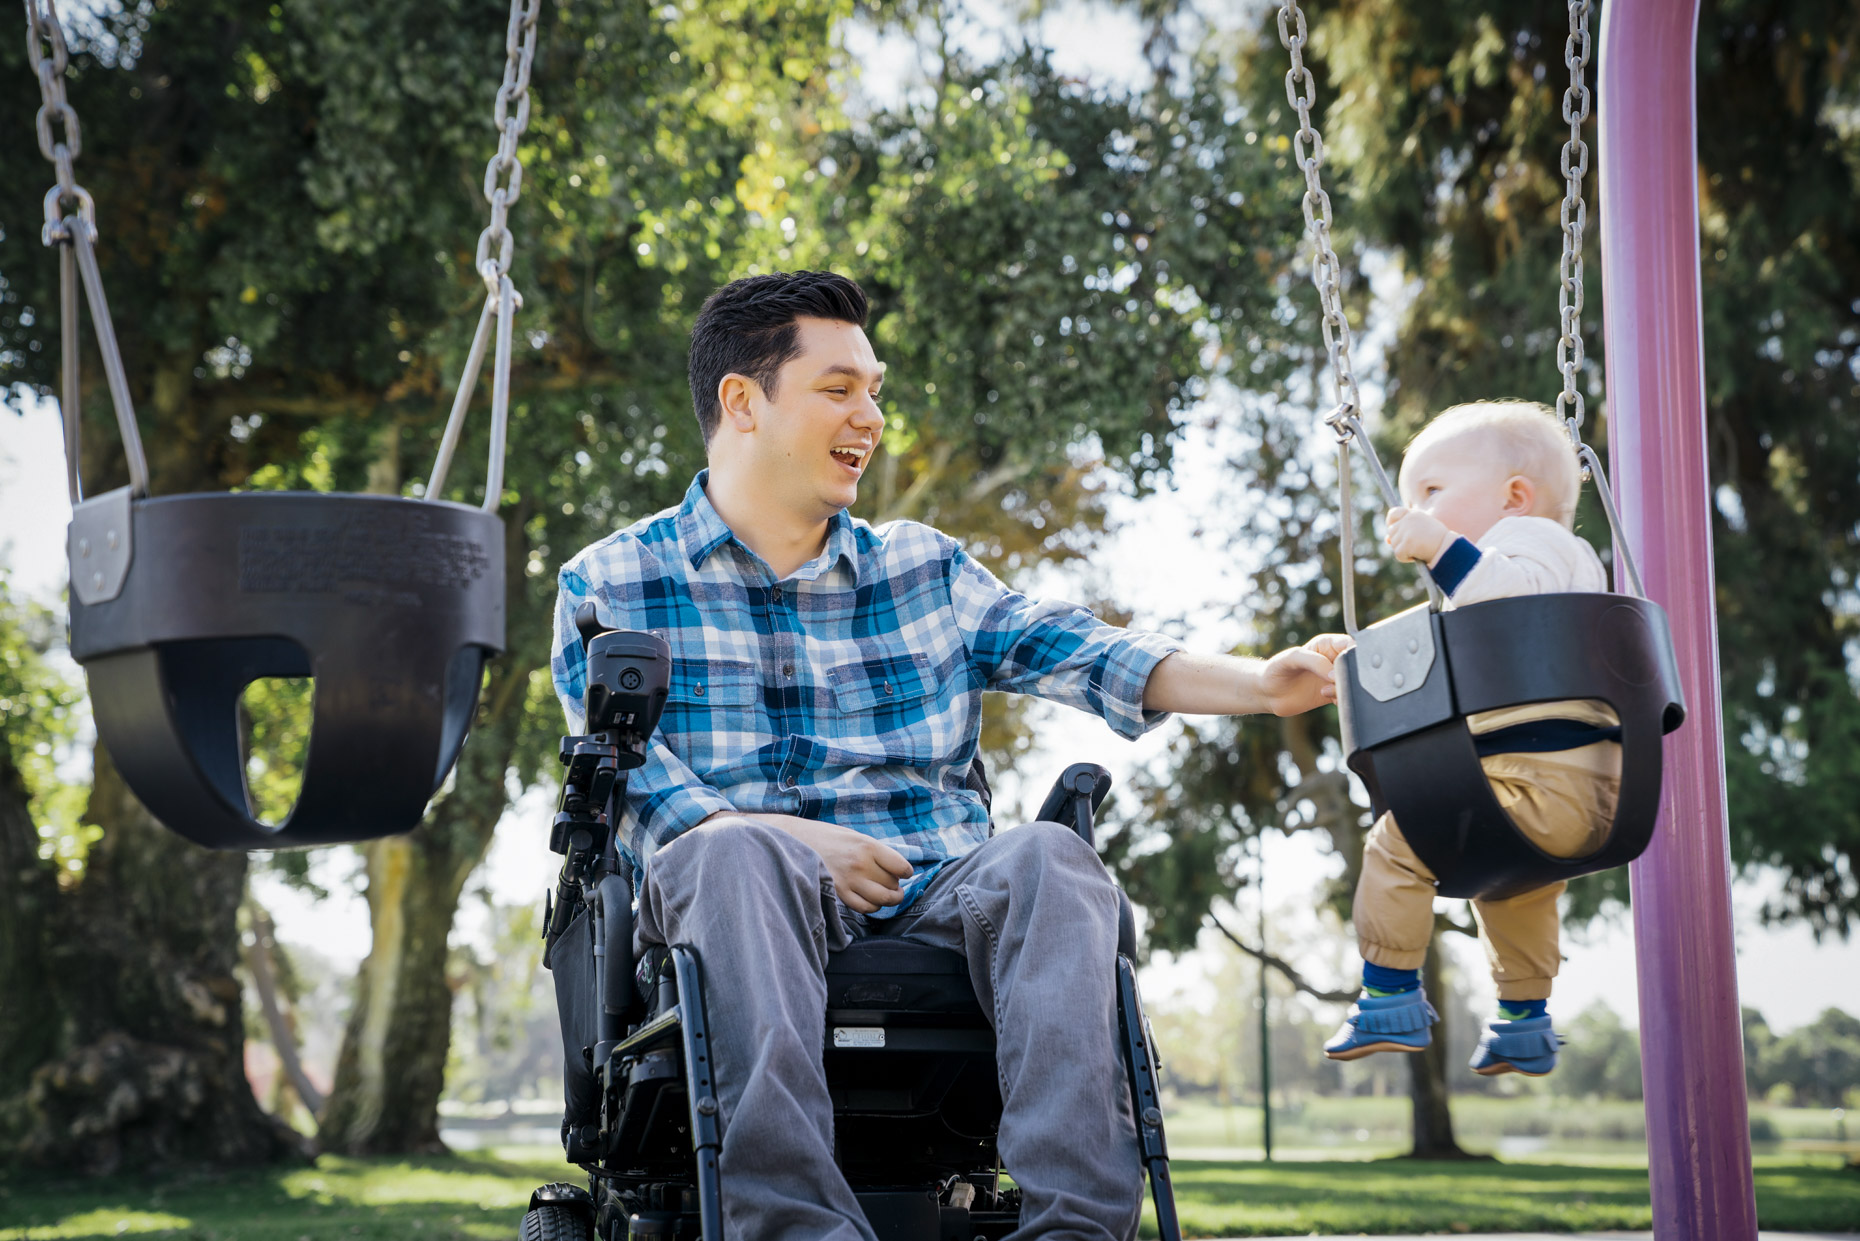 Parapalegic man in wheel chair pushing baby in swing in park